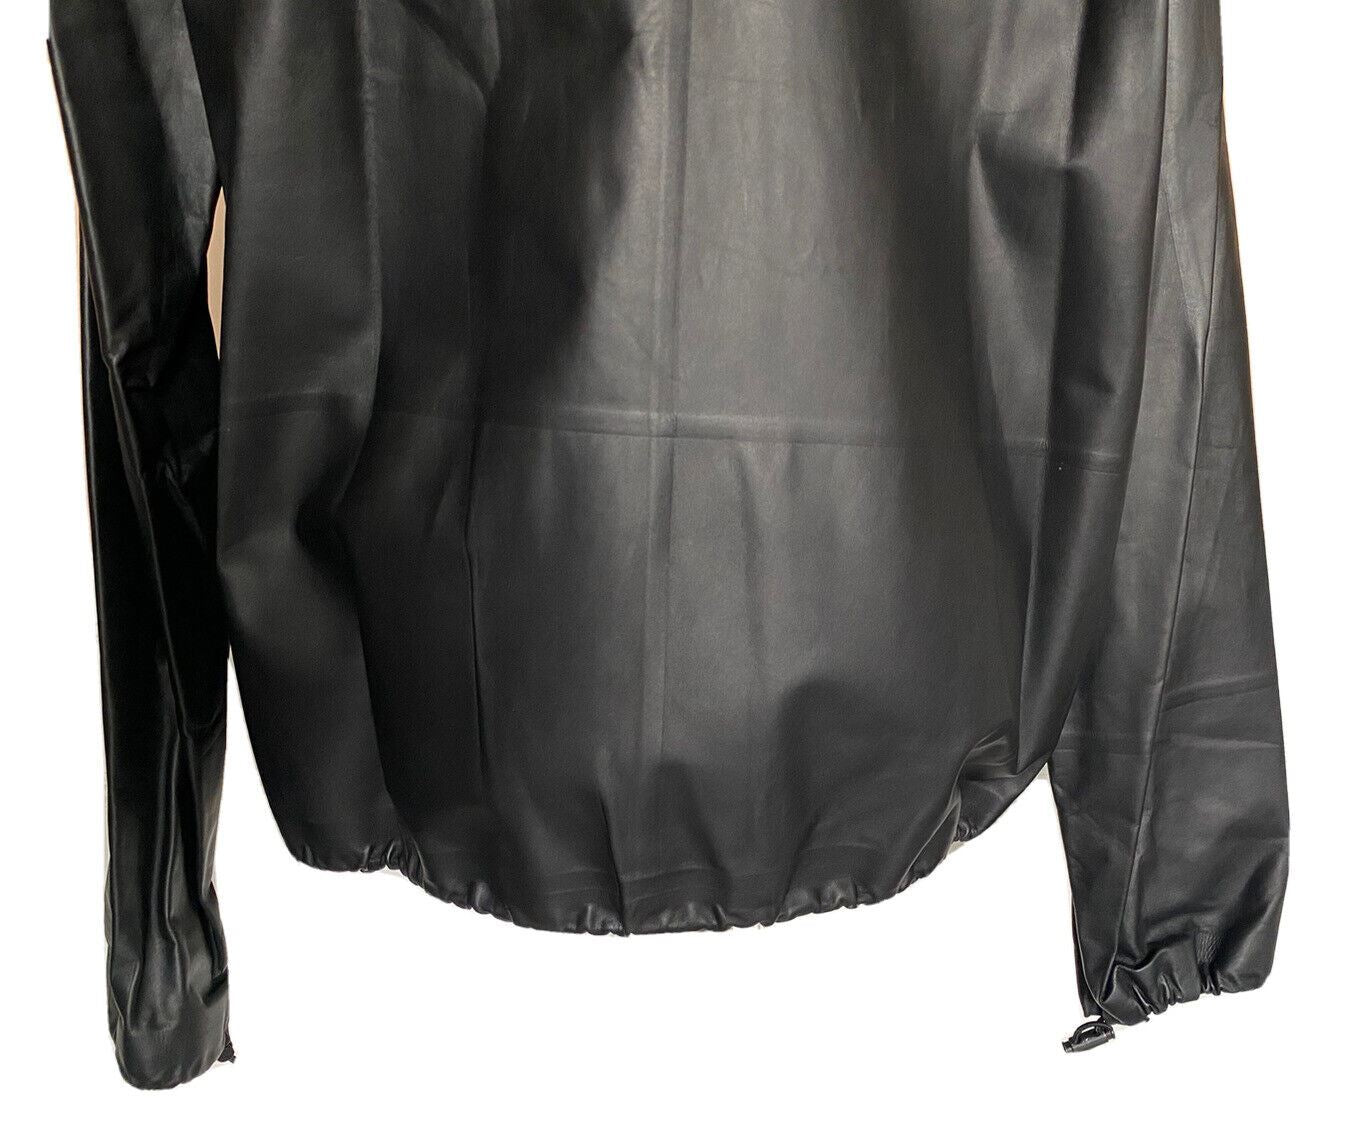 NWT $5900 Bottega Veneta Men's Calf Leather Light Jacket with Hoodie Black 44 US